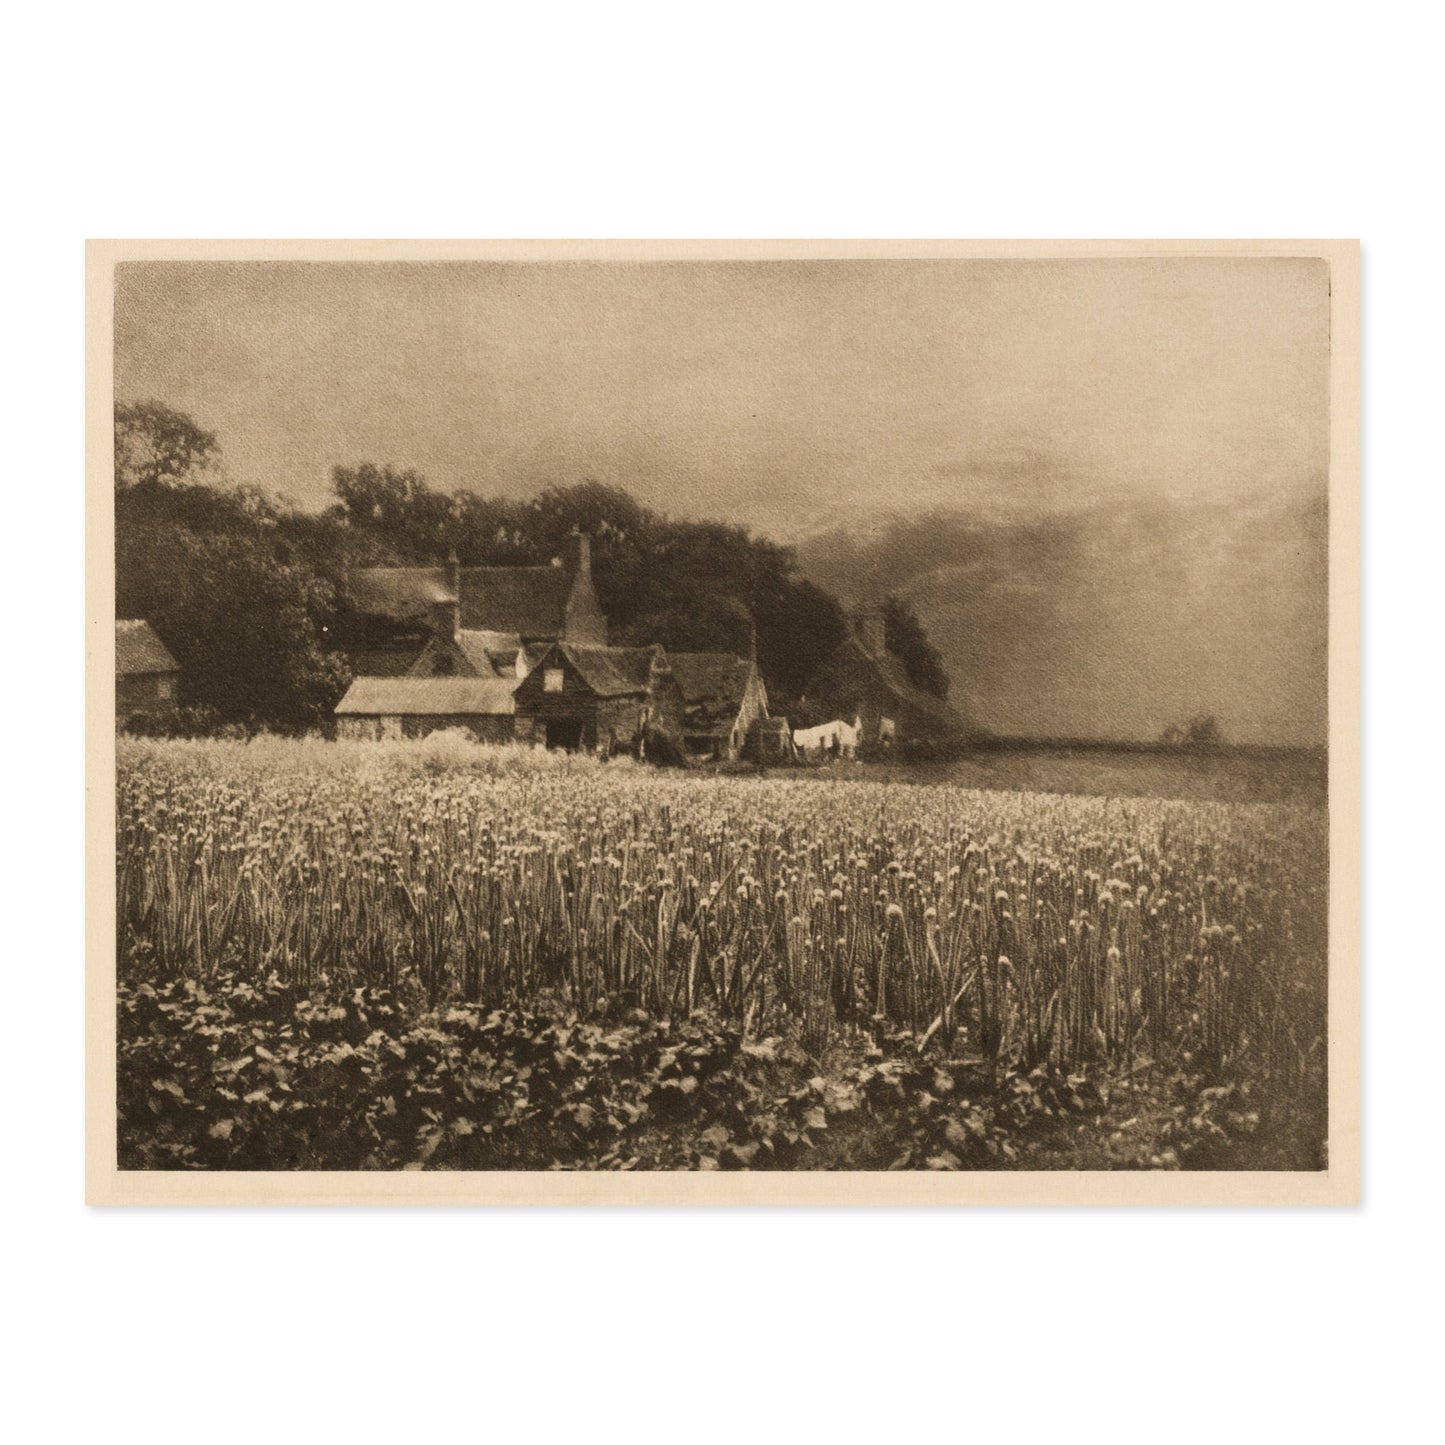 George Davison, The Onion Field 1890